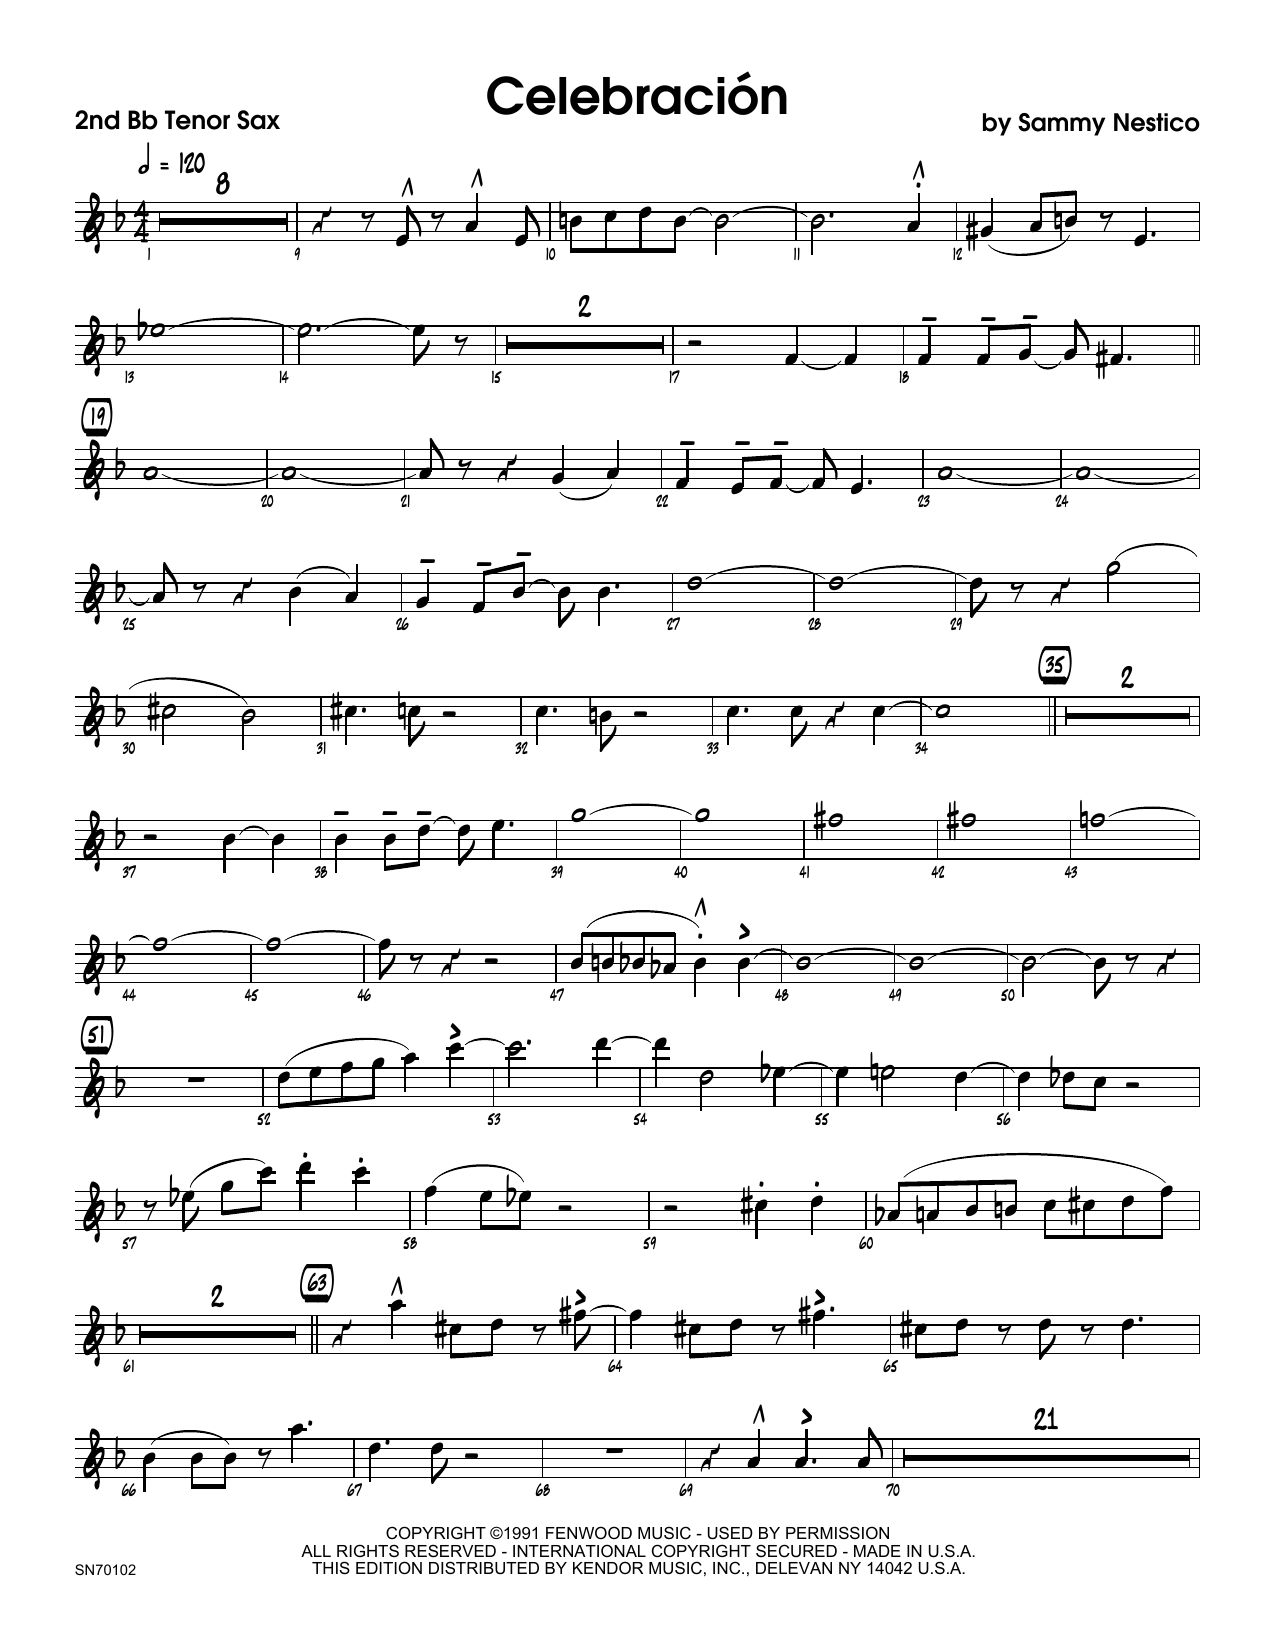 Download Sammy Nestico Celebracion - 2nd Bb Tenor Saxophone Sheet Music